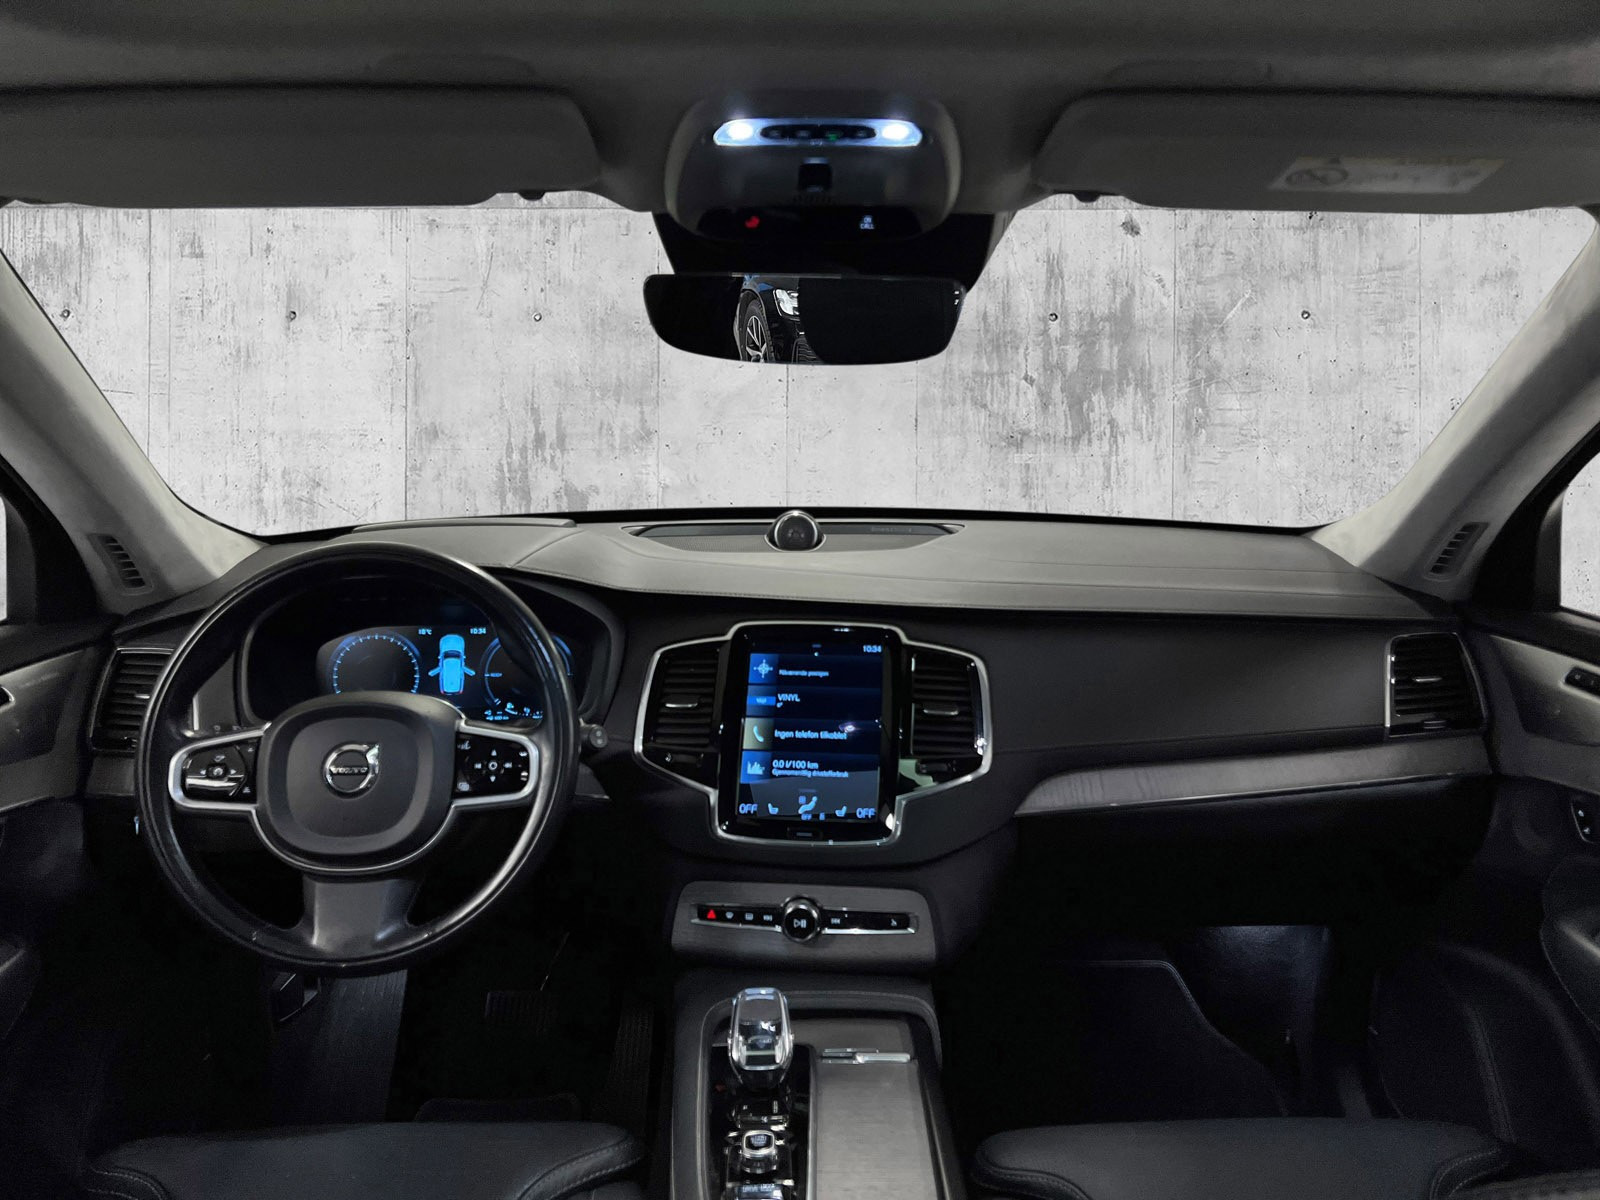 Oversiktlig førermiljø med head up display og høy kvalitat på interiøret